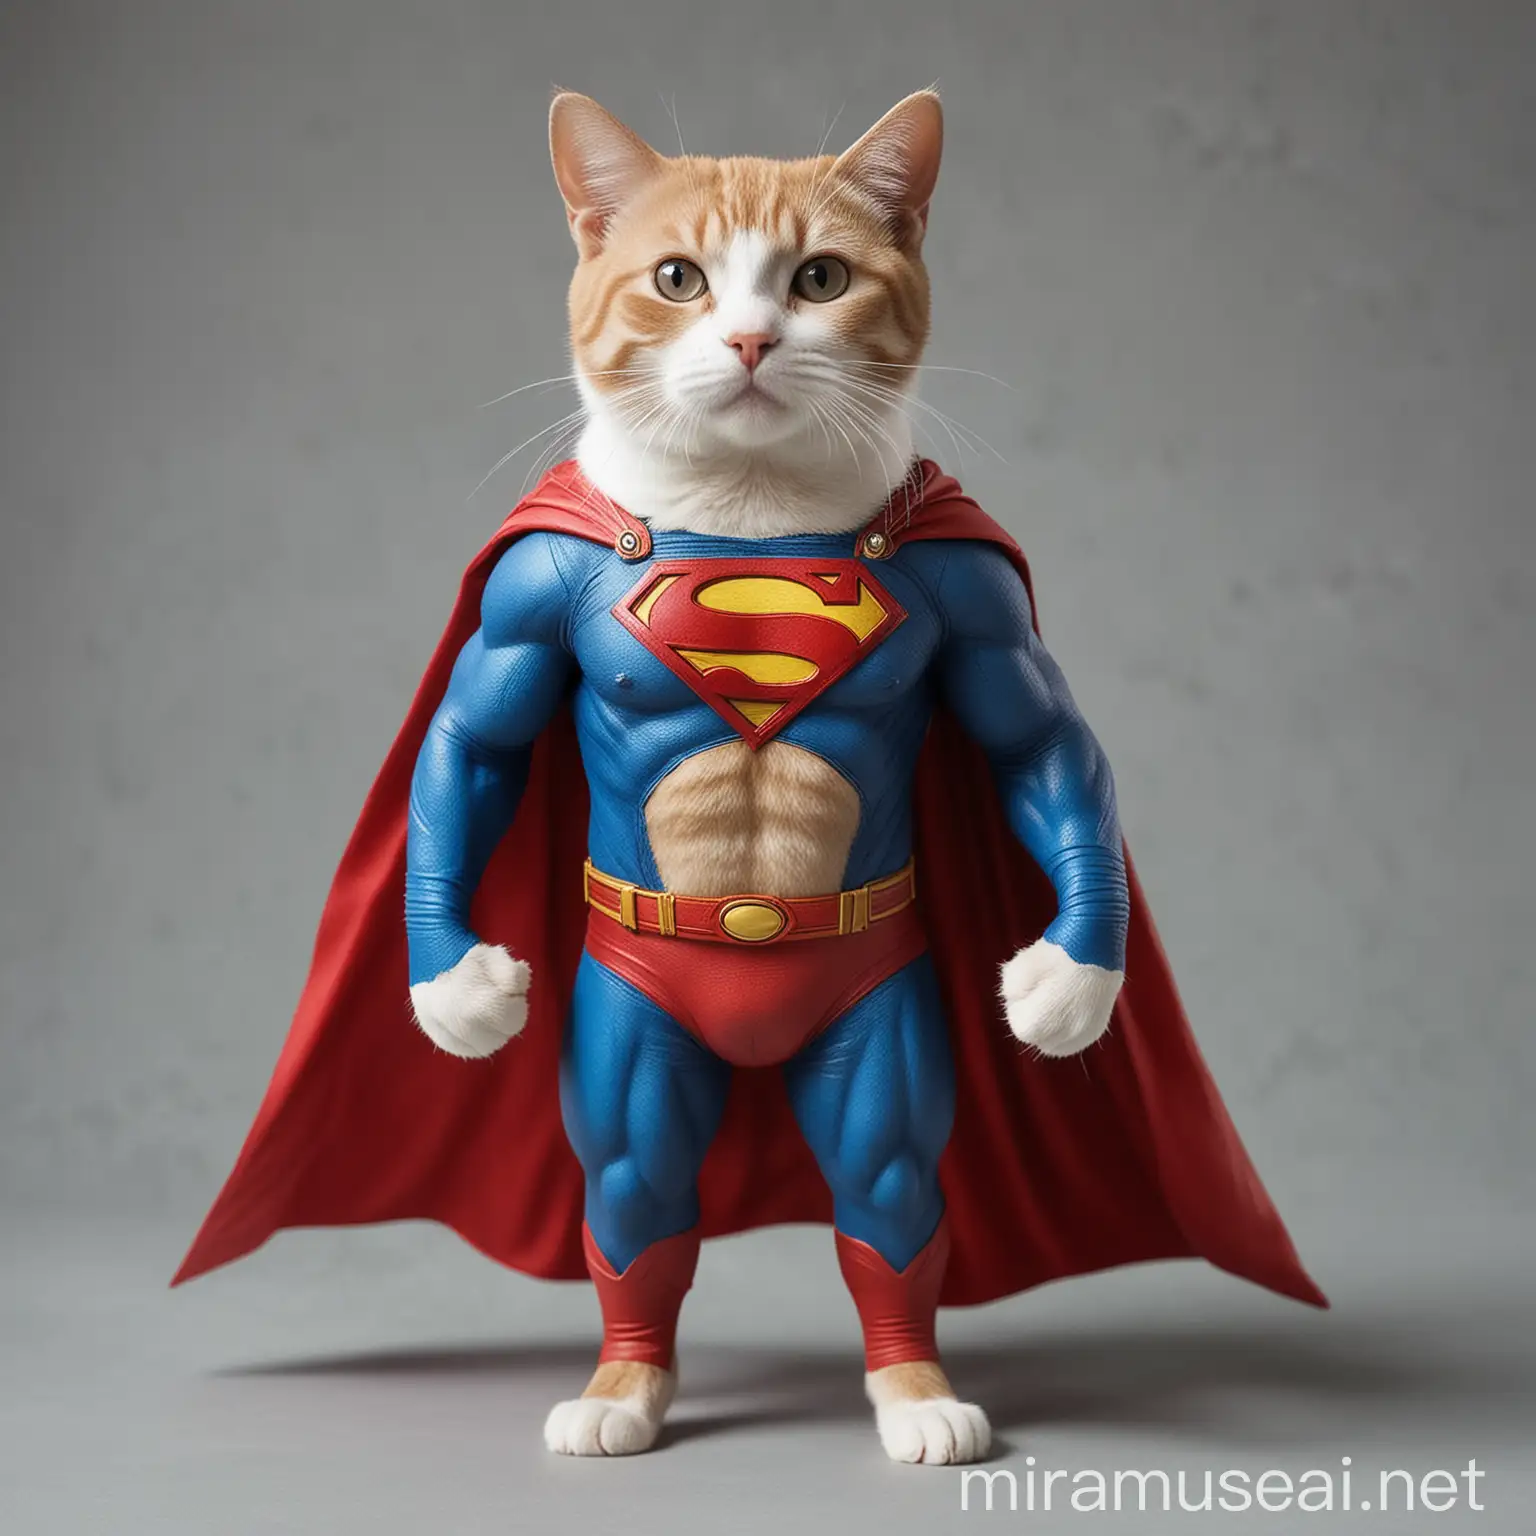 Super Man style Cat Standing Full Body